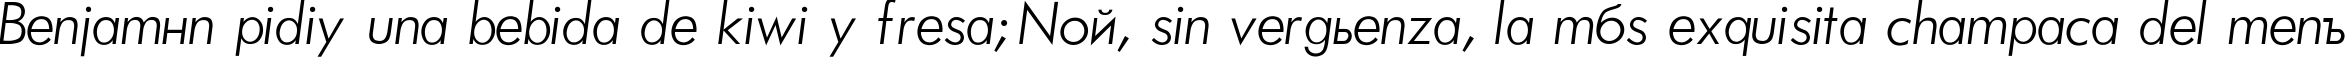 Пример написания шрифтом Futura_Light-Normal-Italic текста на испанском